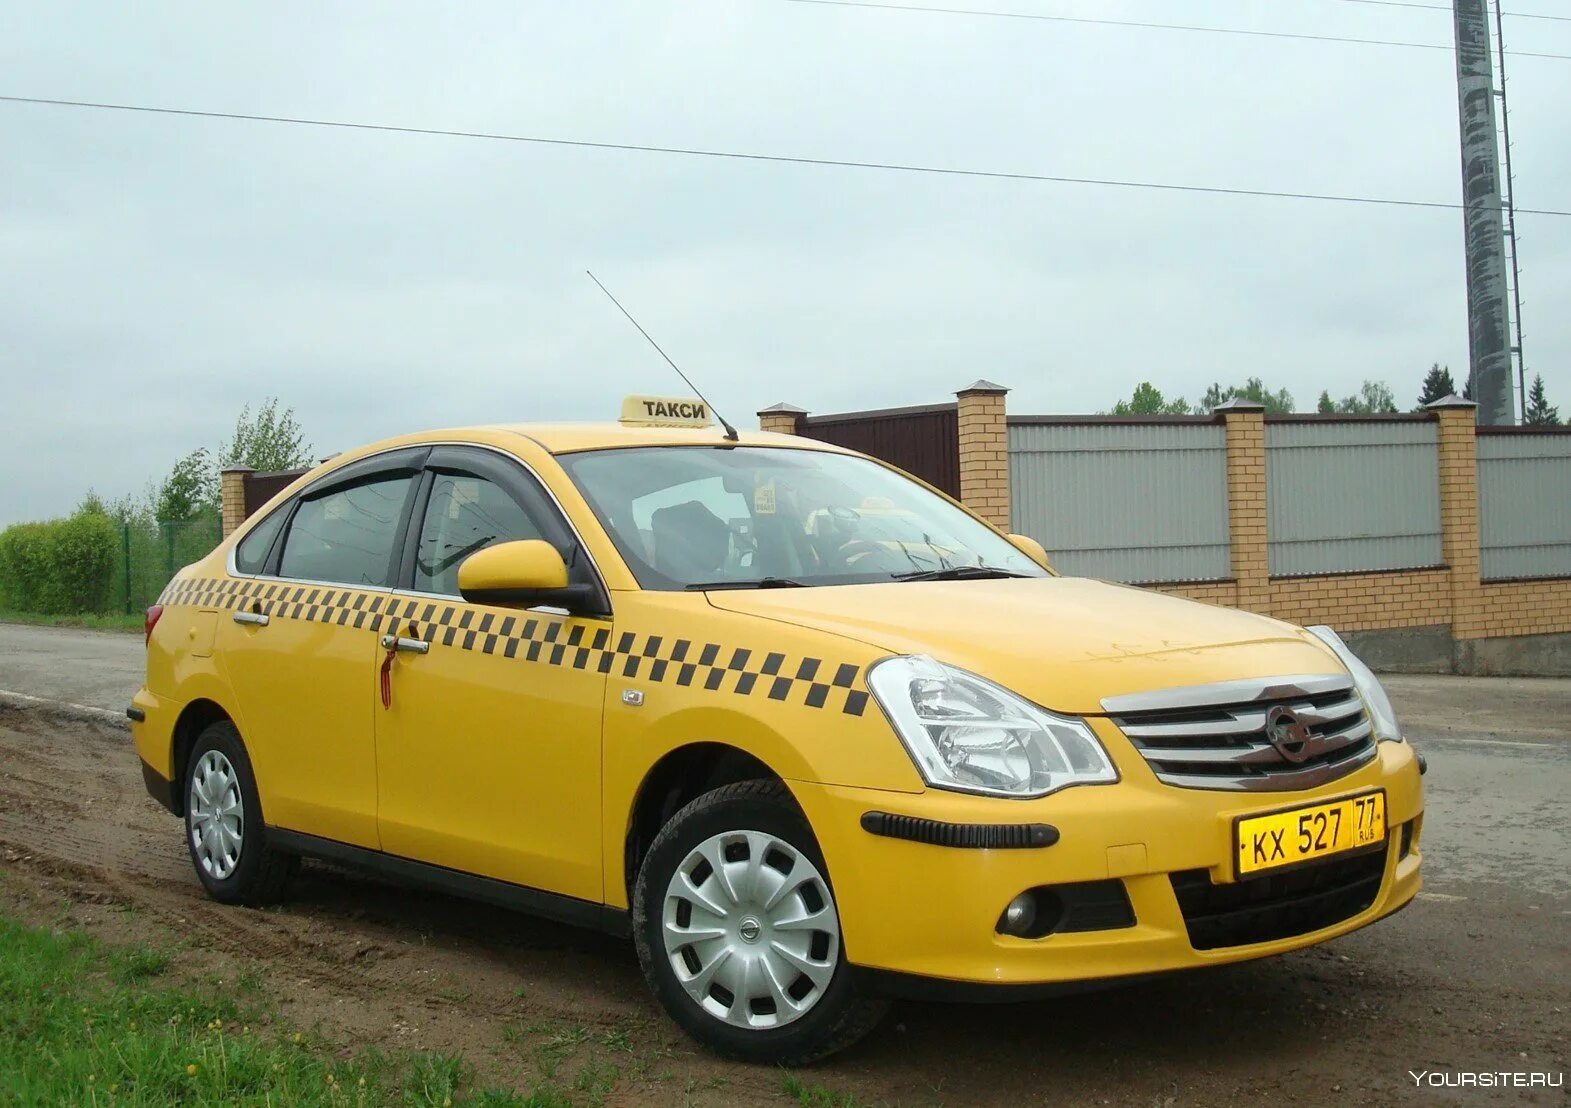 Фото такси машин. Машина "такси". Автомобиль «такси». Такса в машине. Таксист в машине.